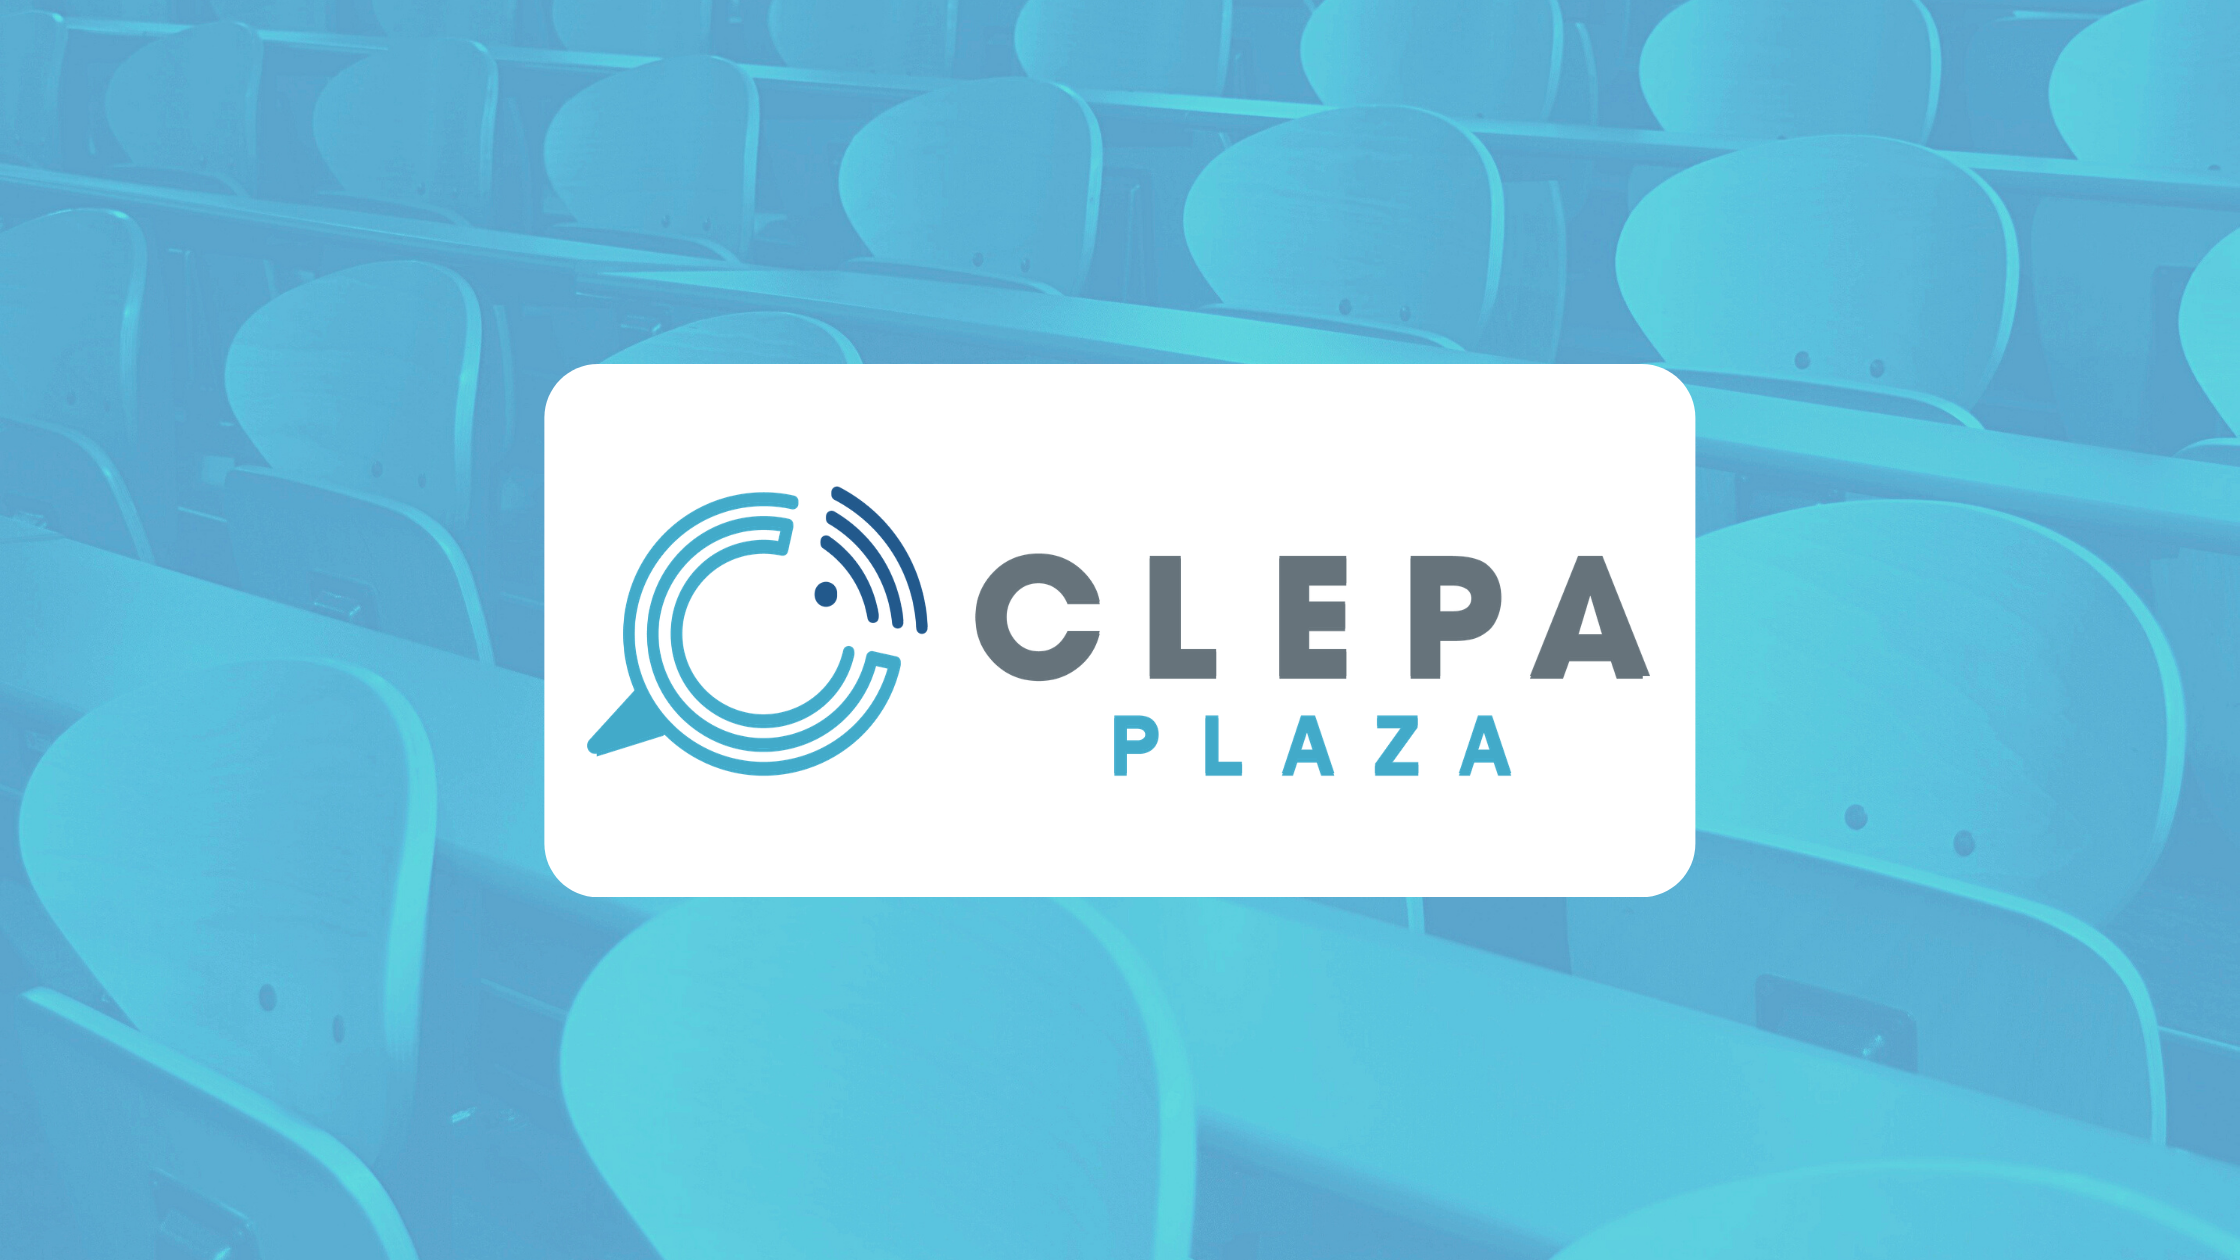 CLEPA Plaza webinar: Software-Defined Vehicle Survey Results 29/11